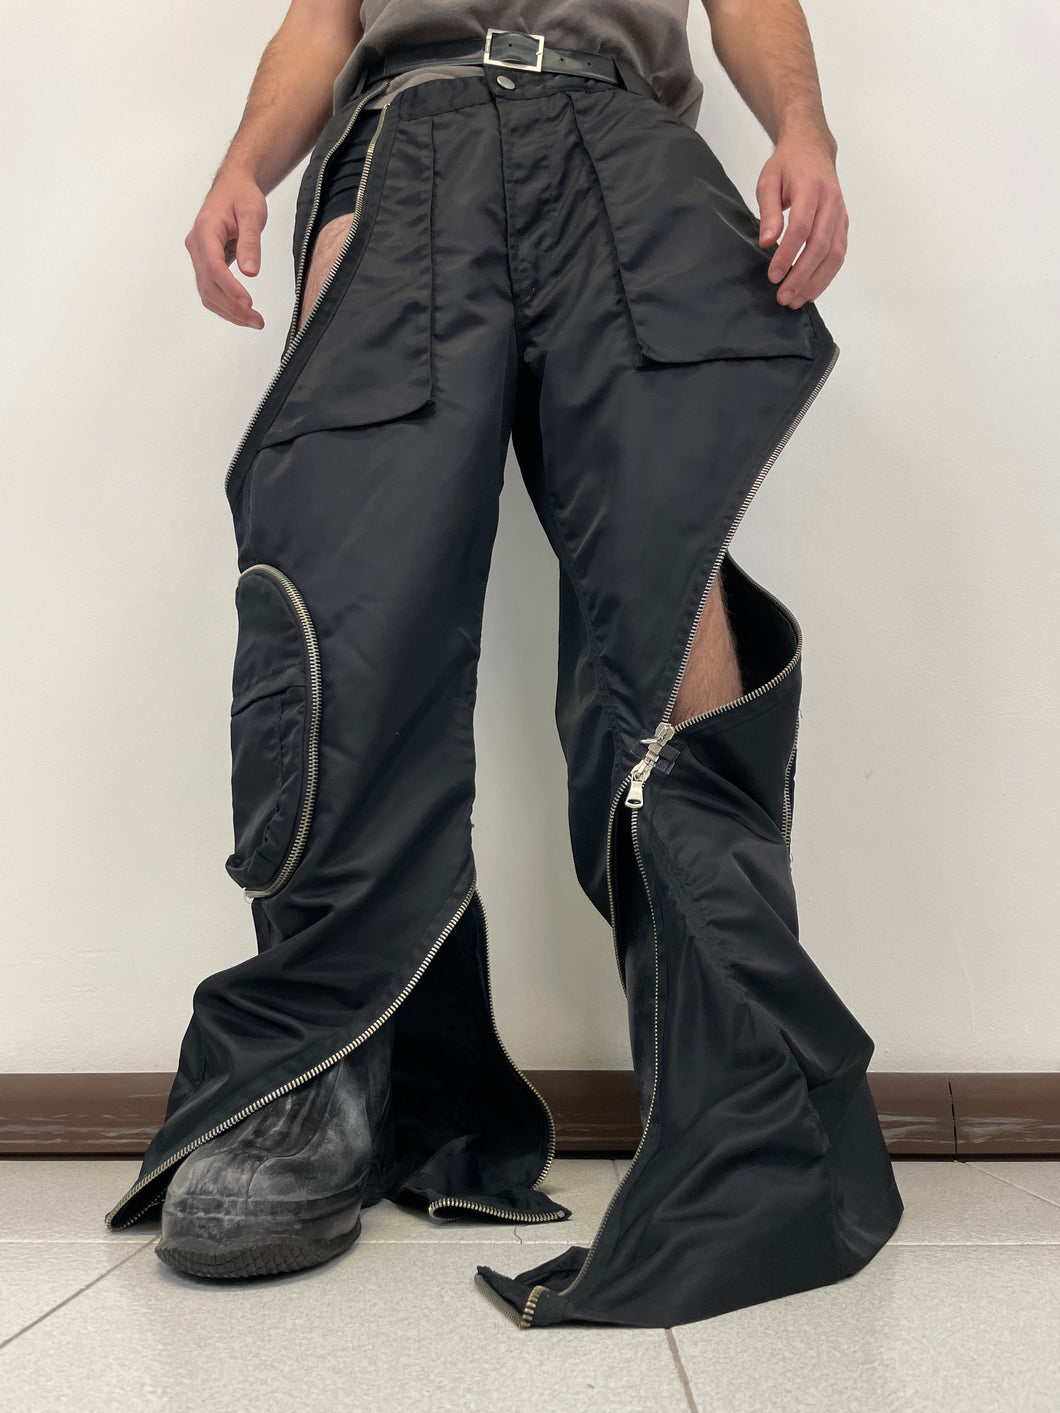 AW2003 Dolce & Gabbana tornado cargo pants